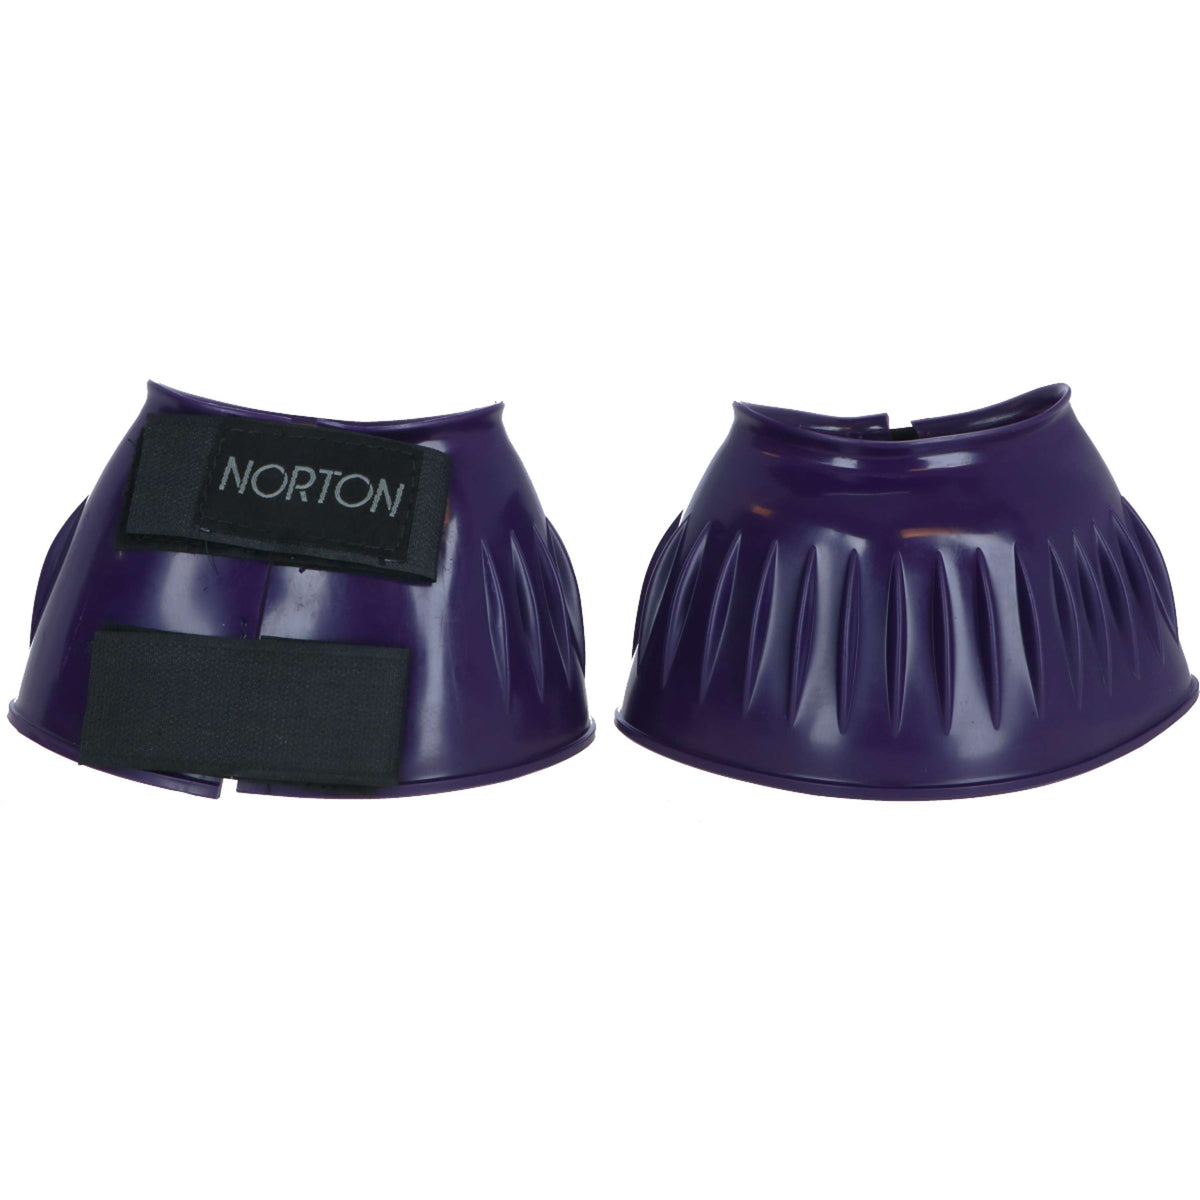 Norton Hufglocken Crazy Violett